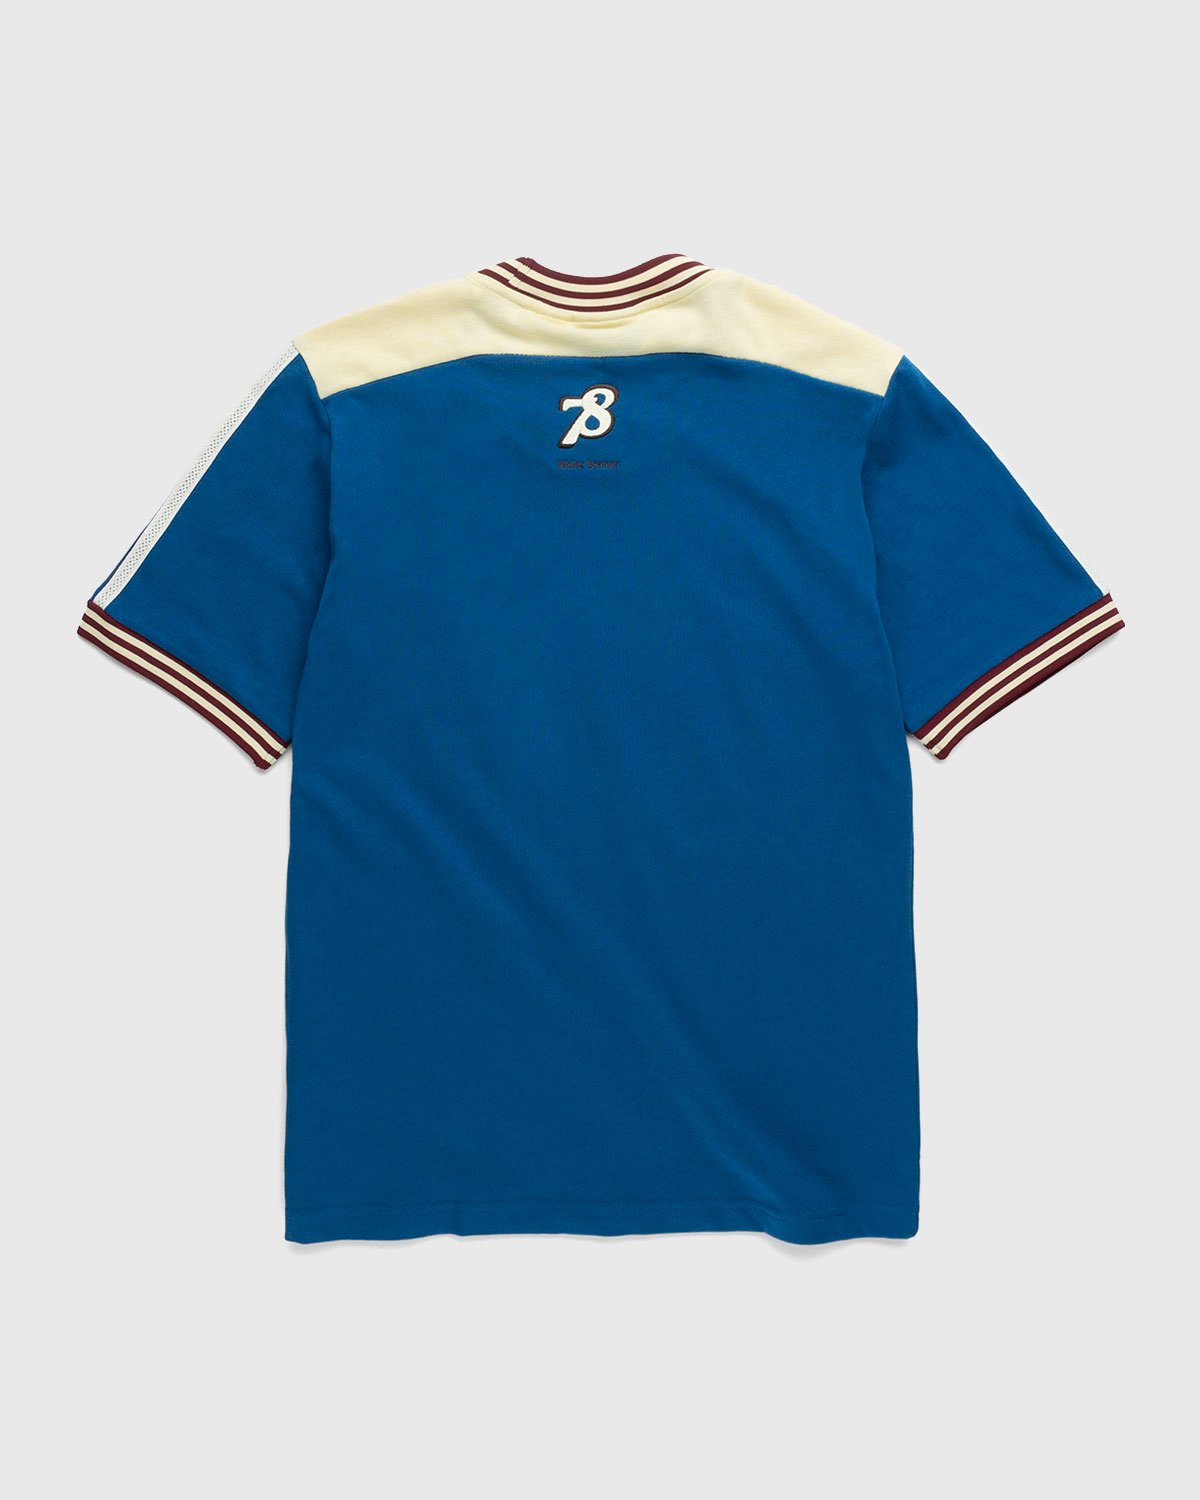 Adidas x Wales Bonner - College T-Shirt Dark Marine - Clothing - Blue - Image 2